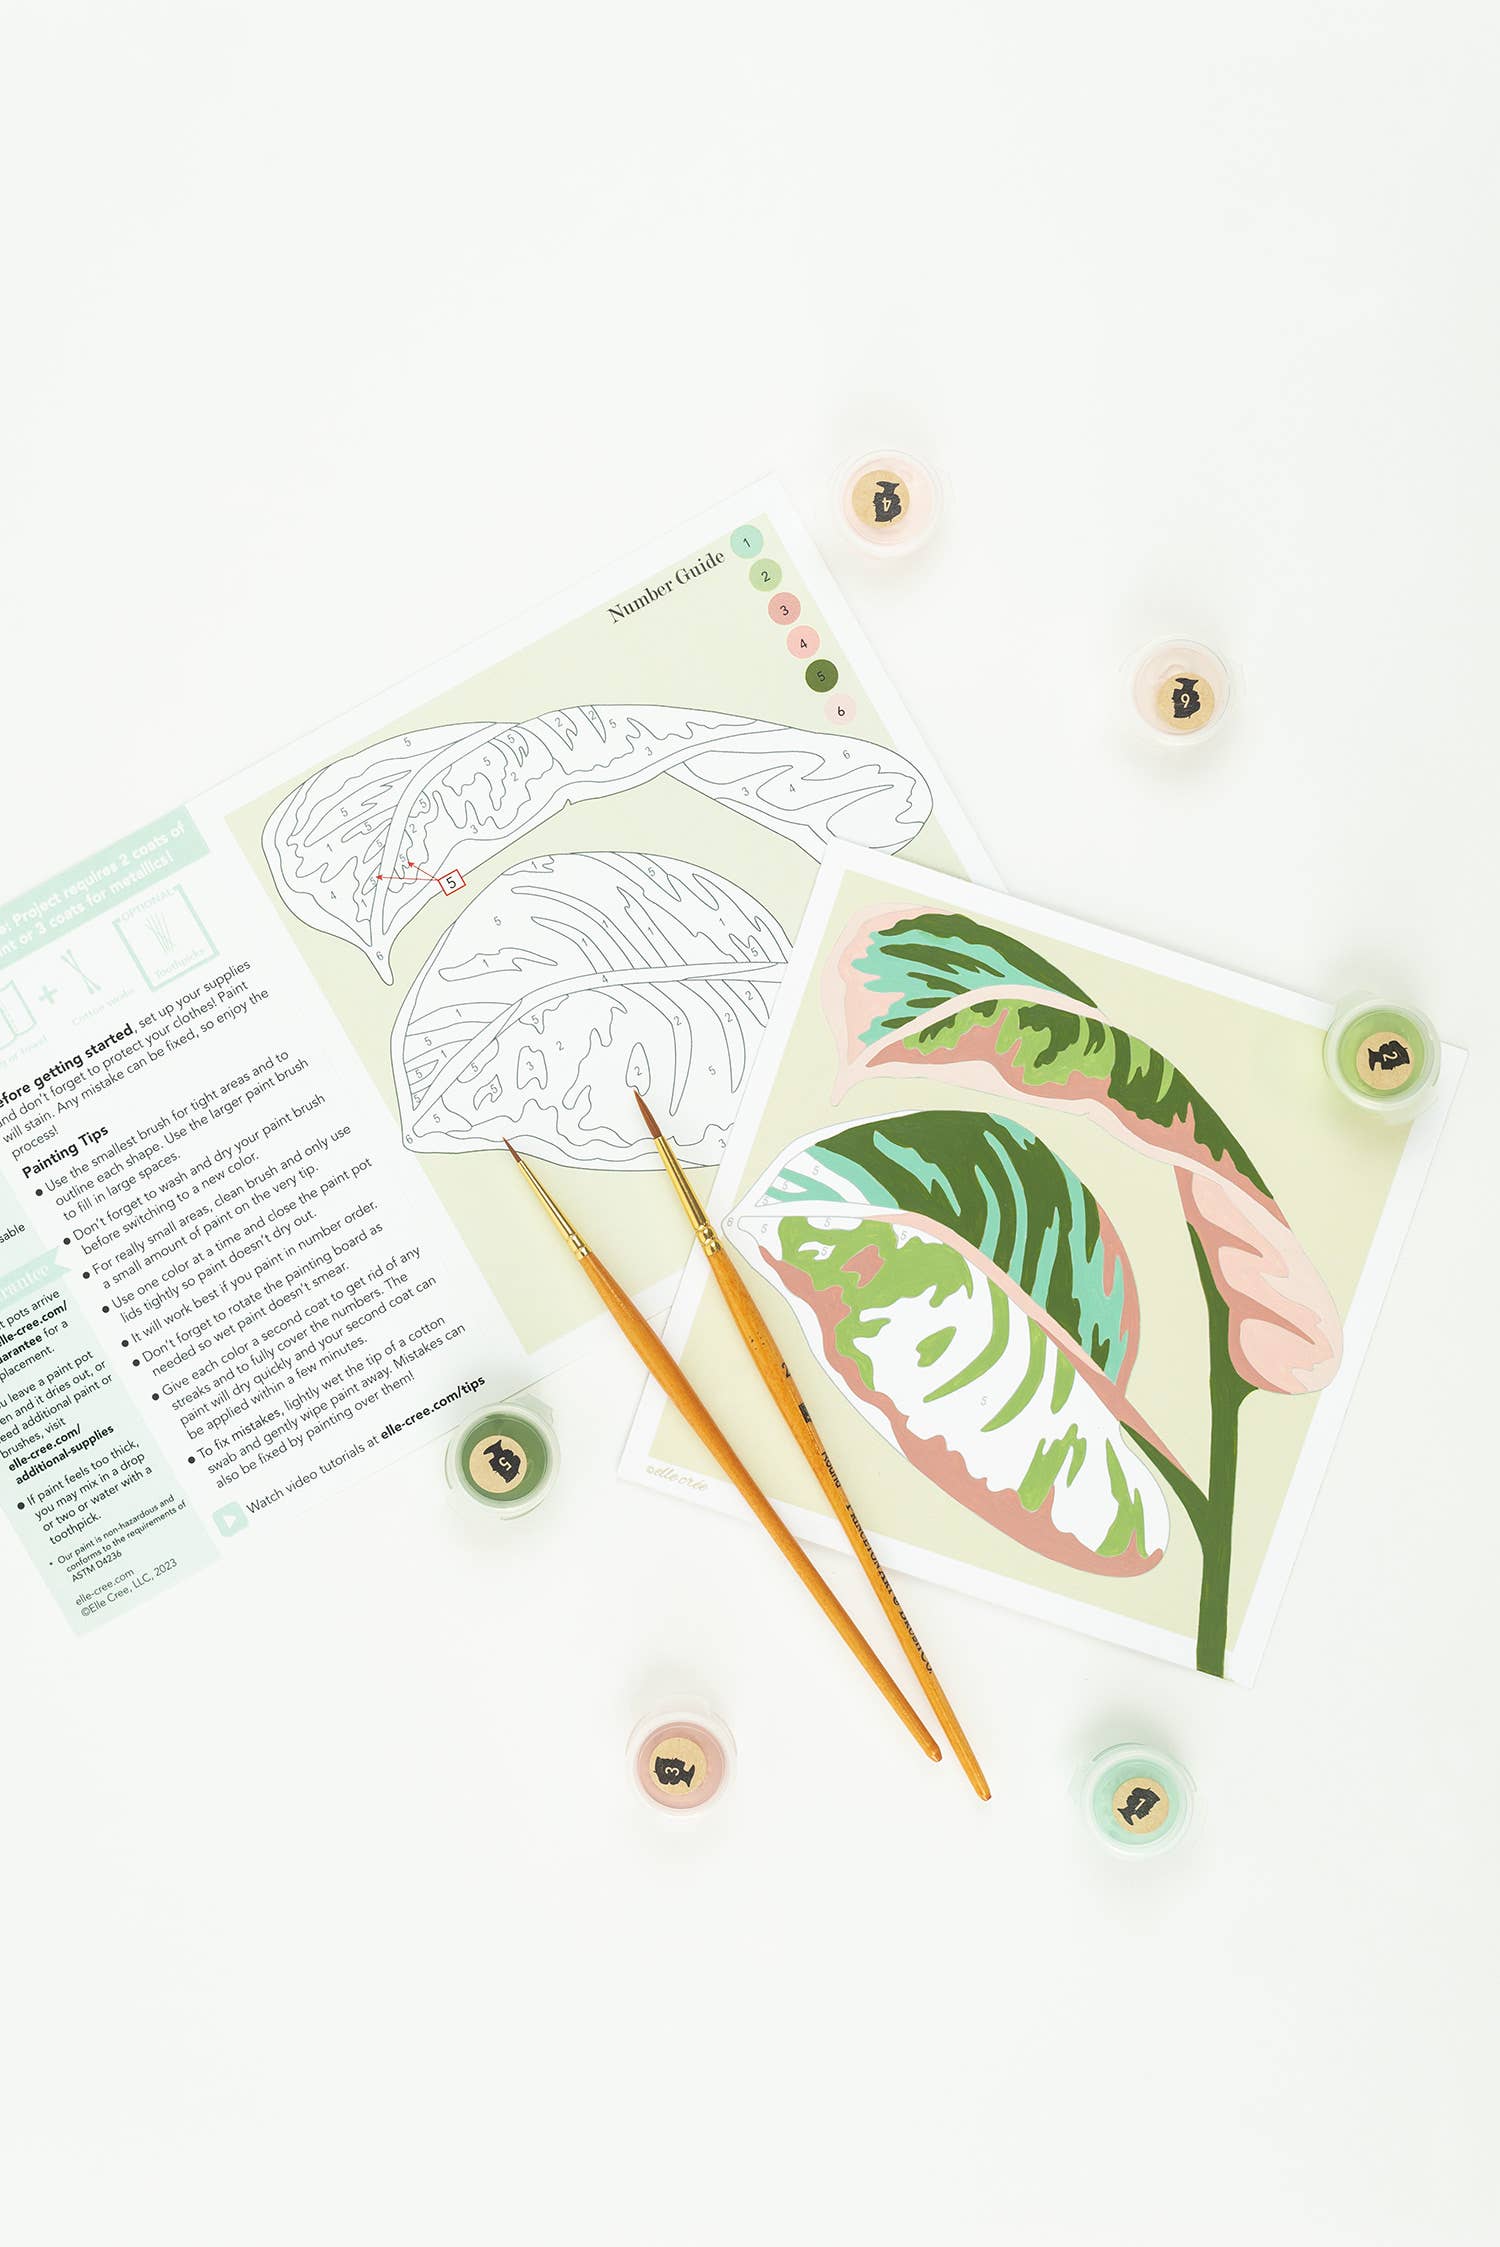 Elle Crée (She Creates) - Rubber Plant Leaves MINI Paint-by-Number Kit